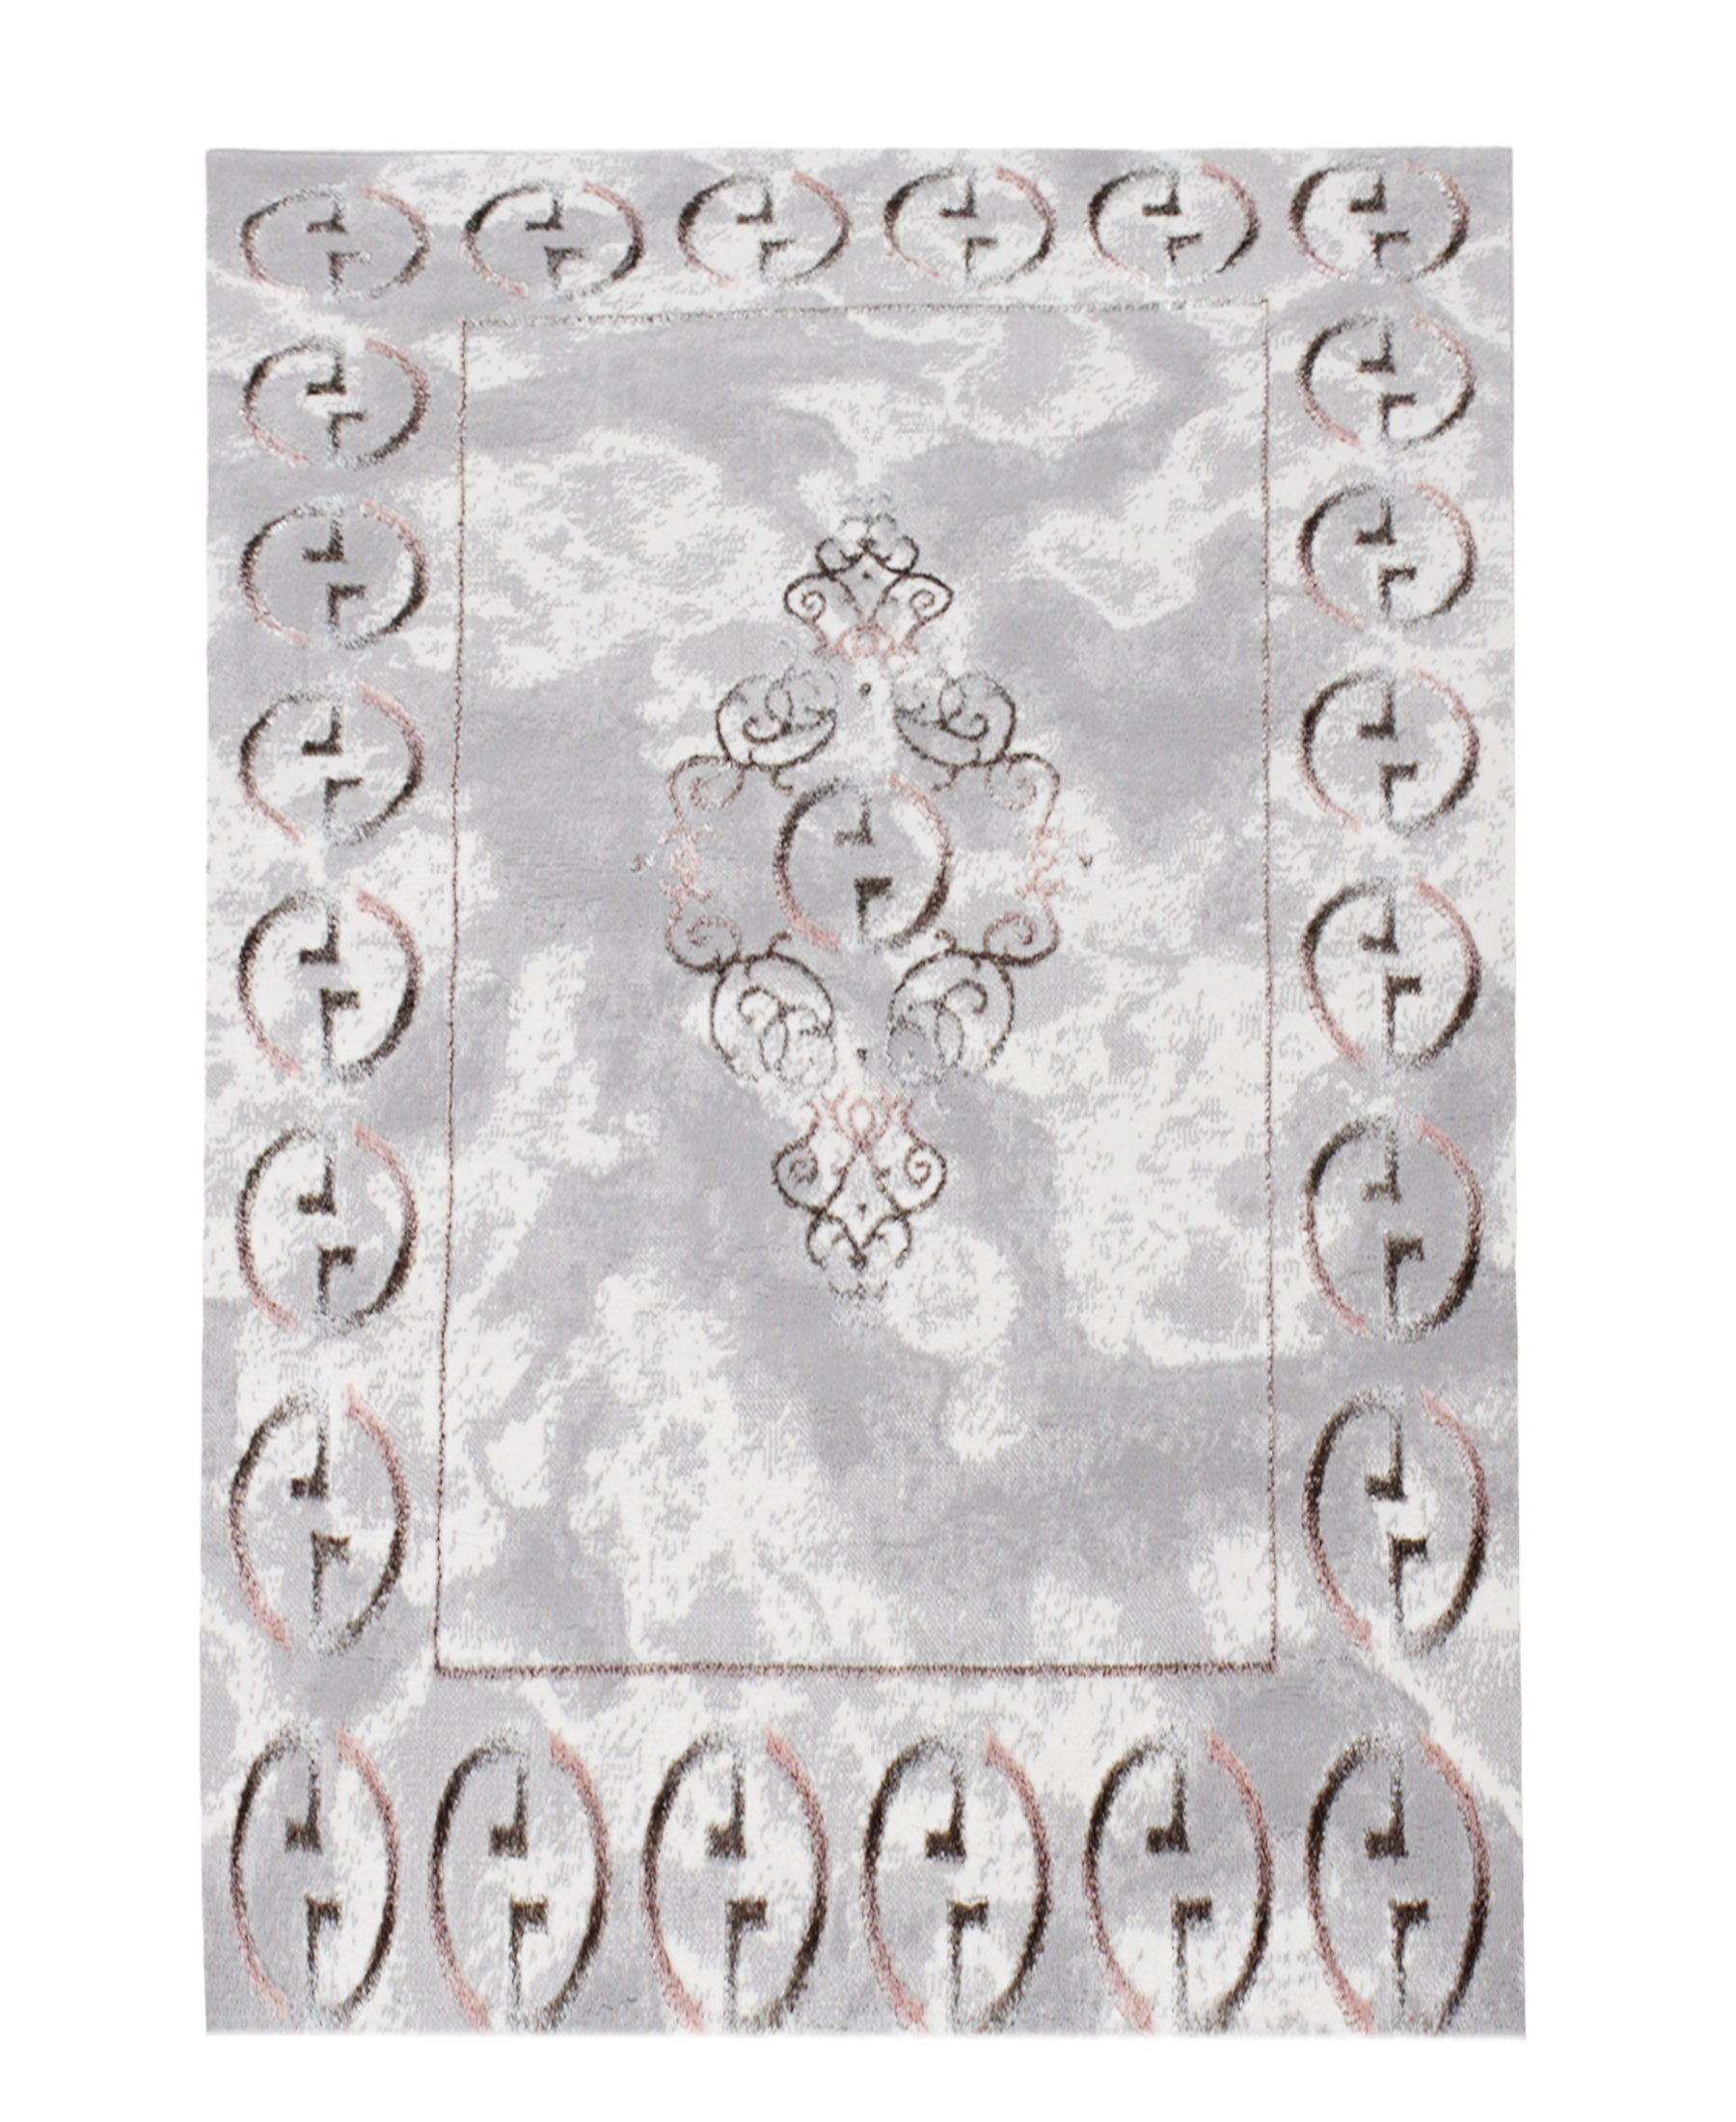 Bodrum Gucci Carpet 1200mm X 1600mm - Grey